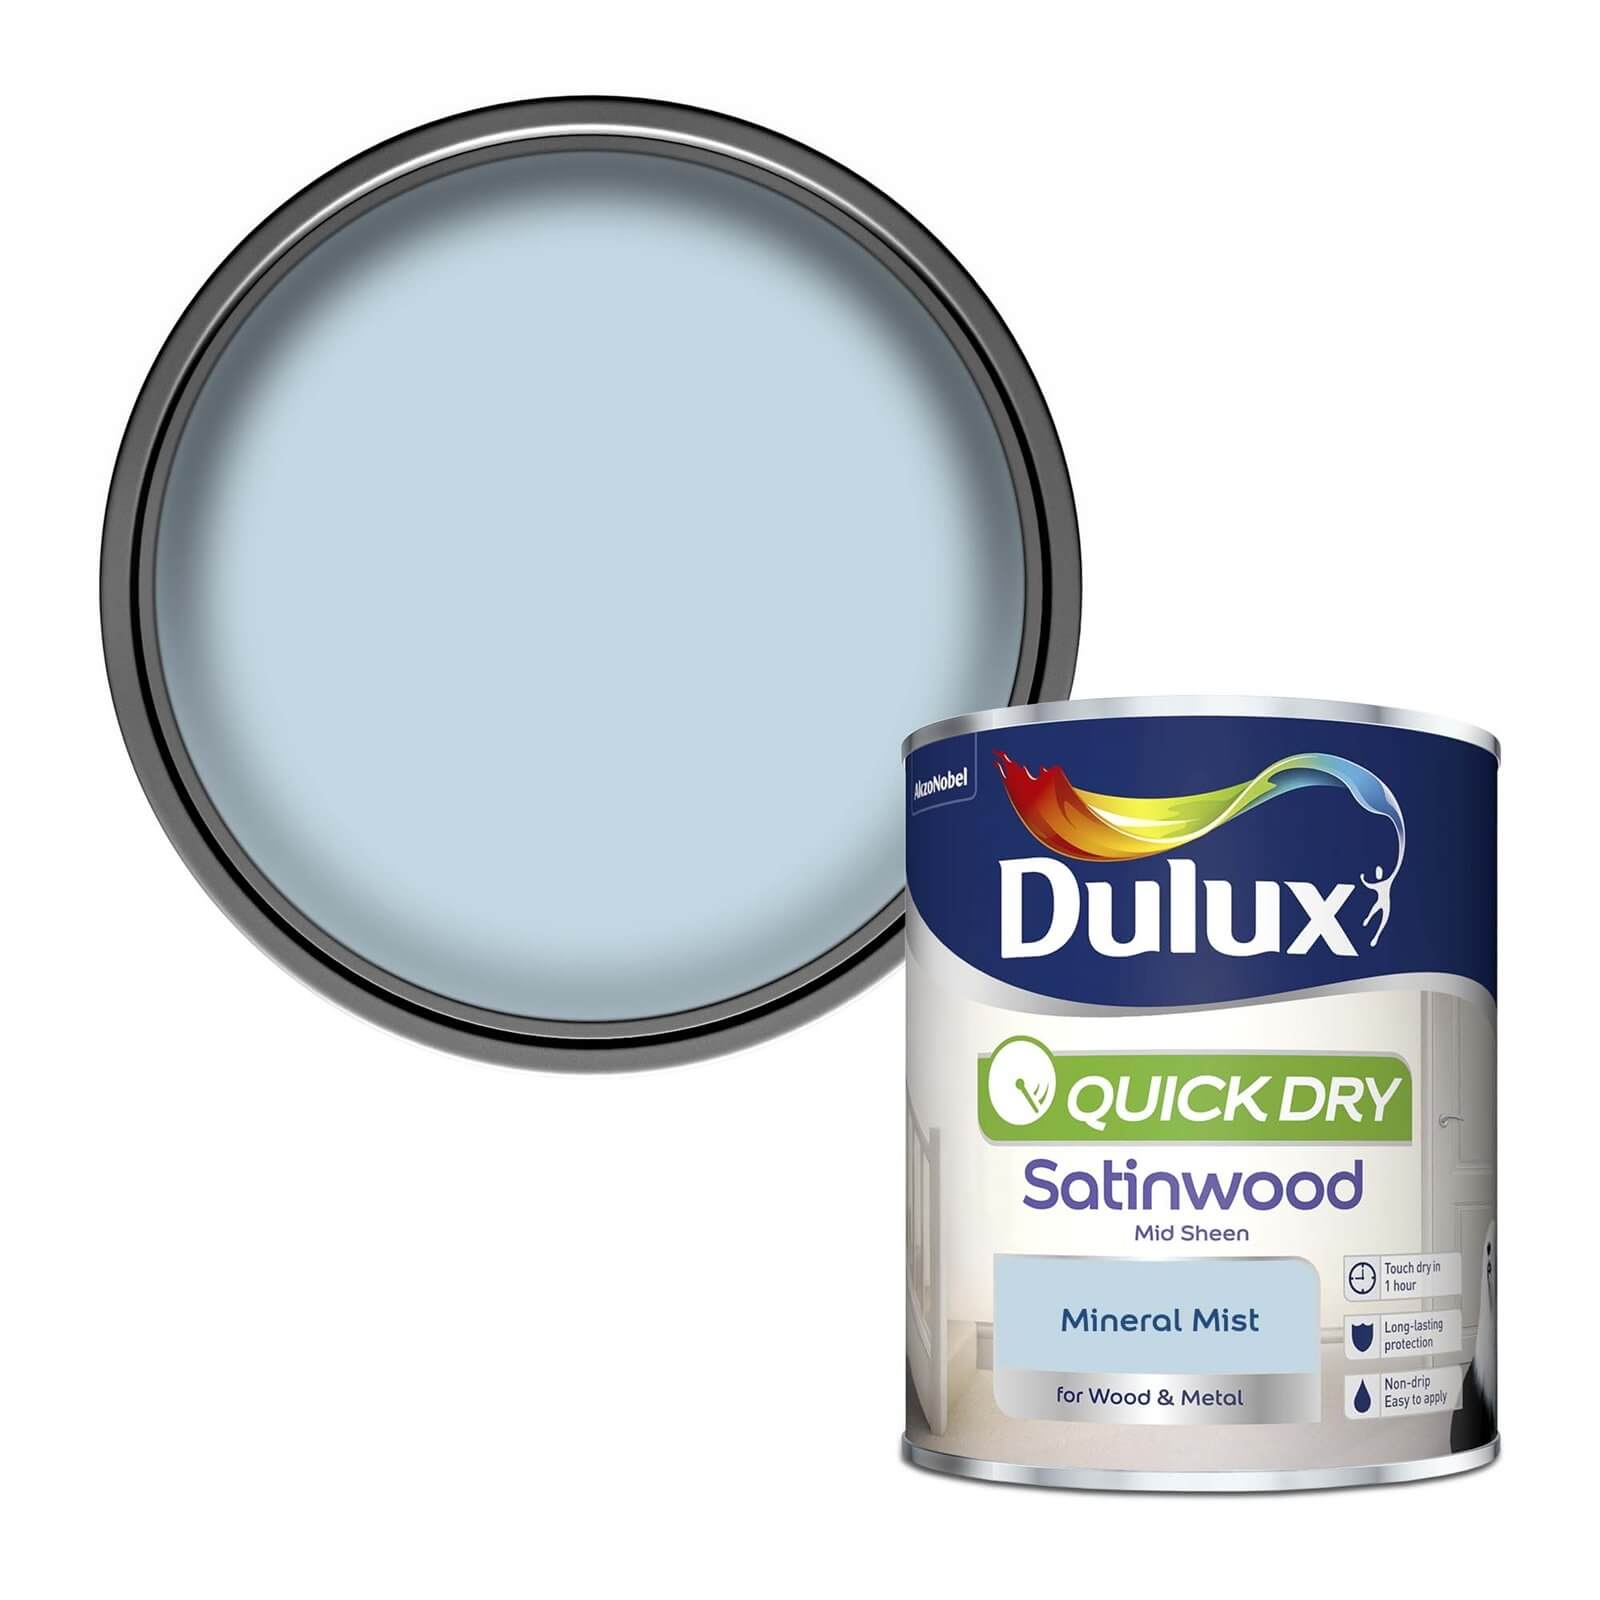 Dulux Quick Dry Satinwood Mineral Mist - 750ml